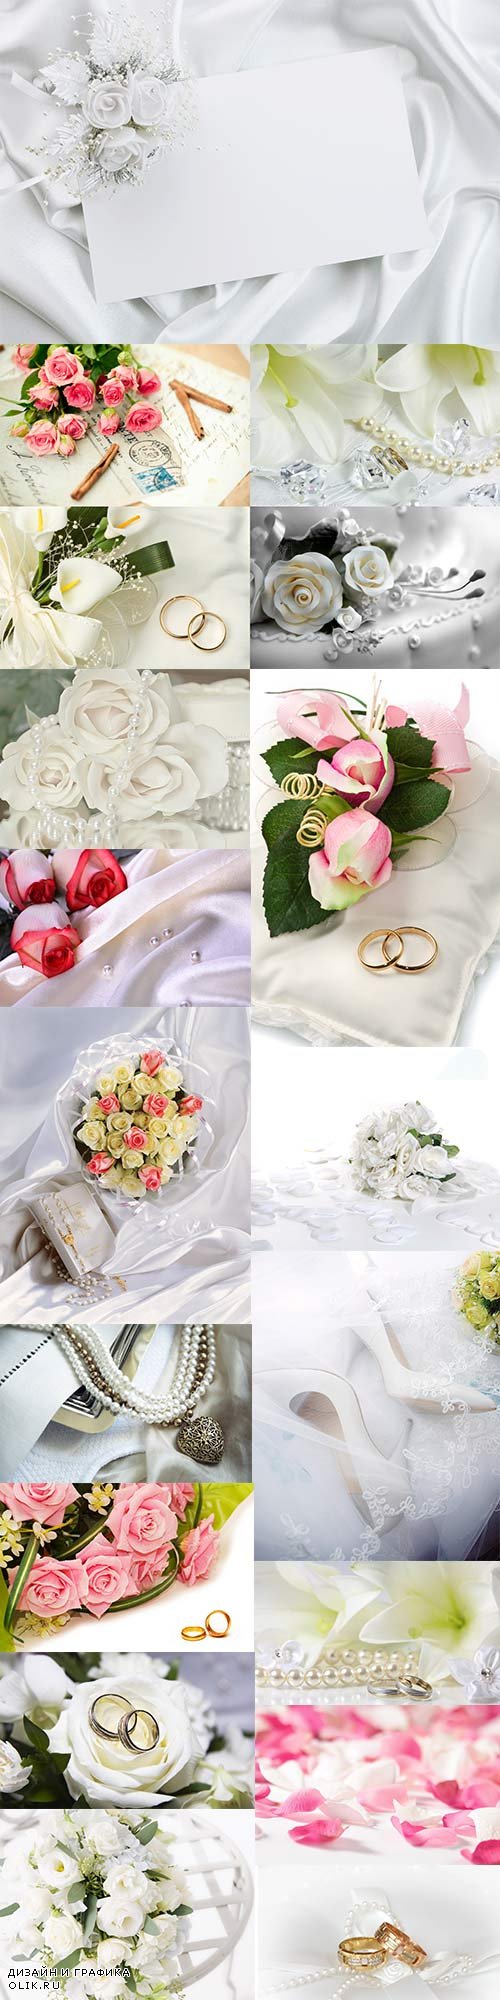 Romantic wedding backgrounds